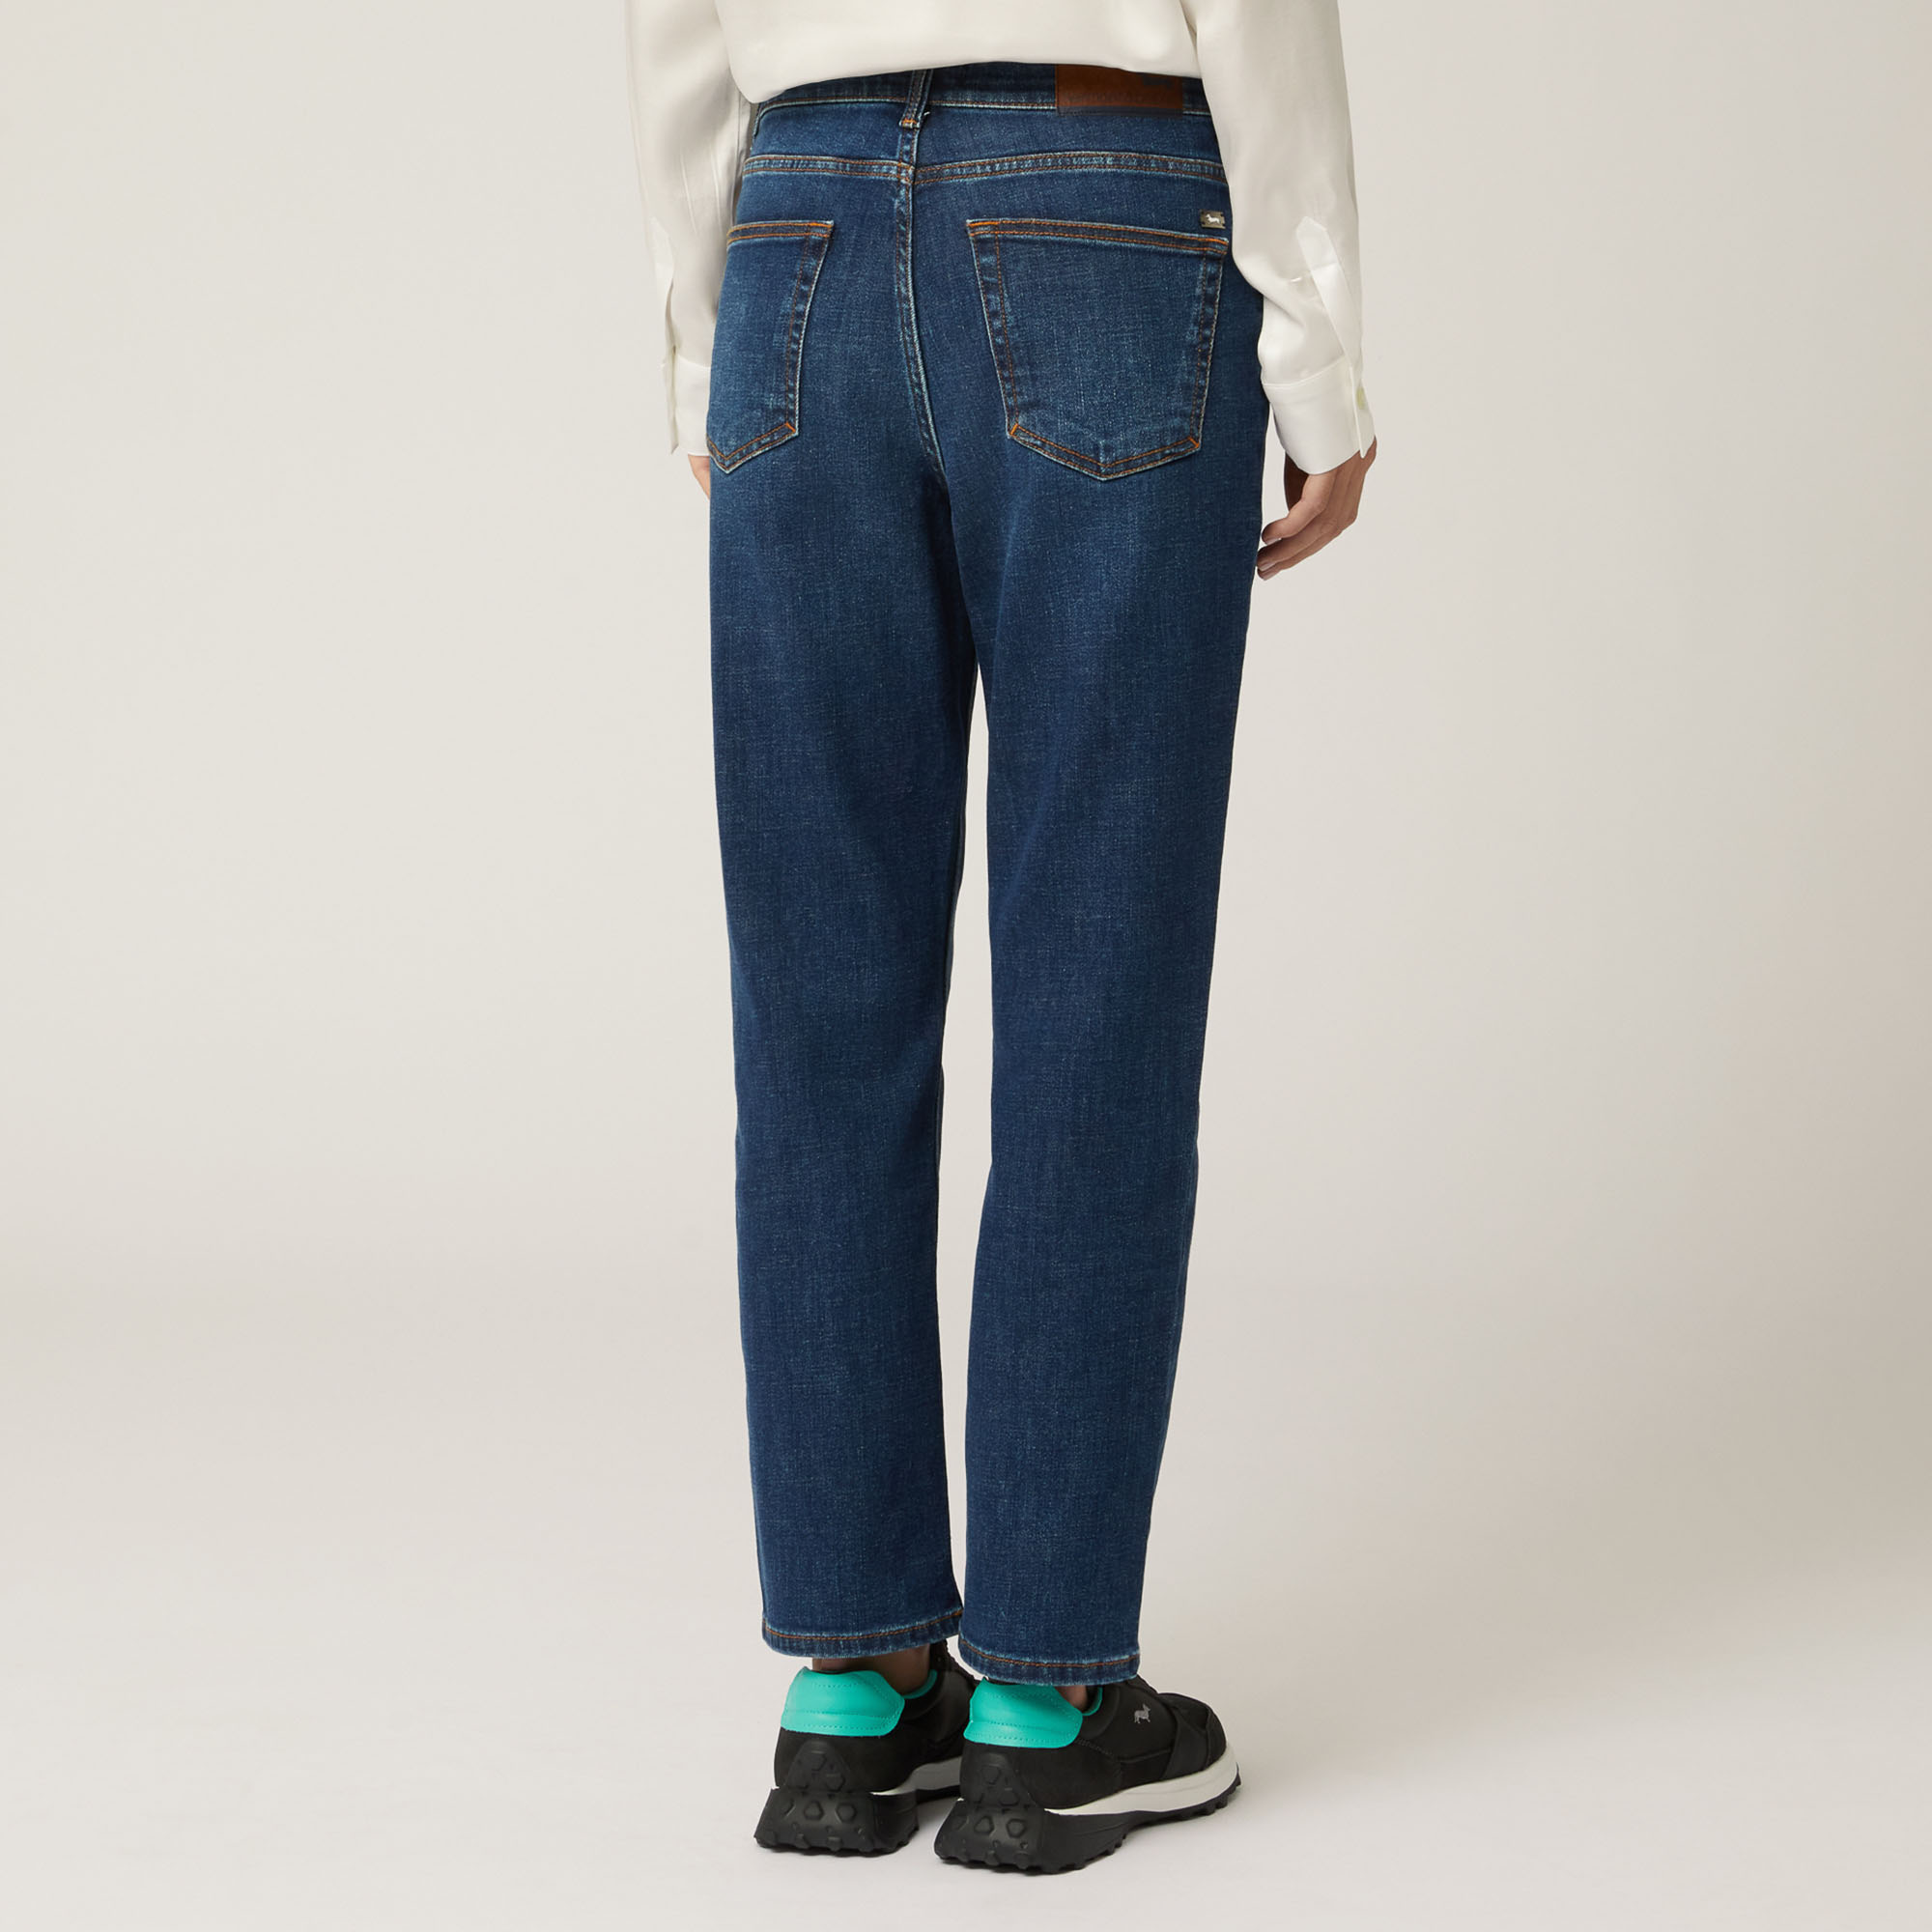 Pantalone Cinque Tasche In Denim Regular Fit, Blu Denim, large image number 1